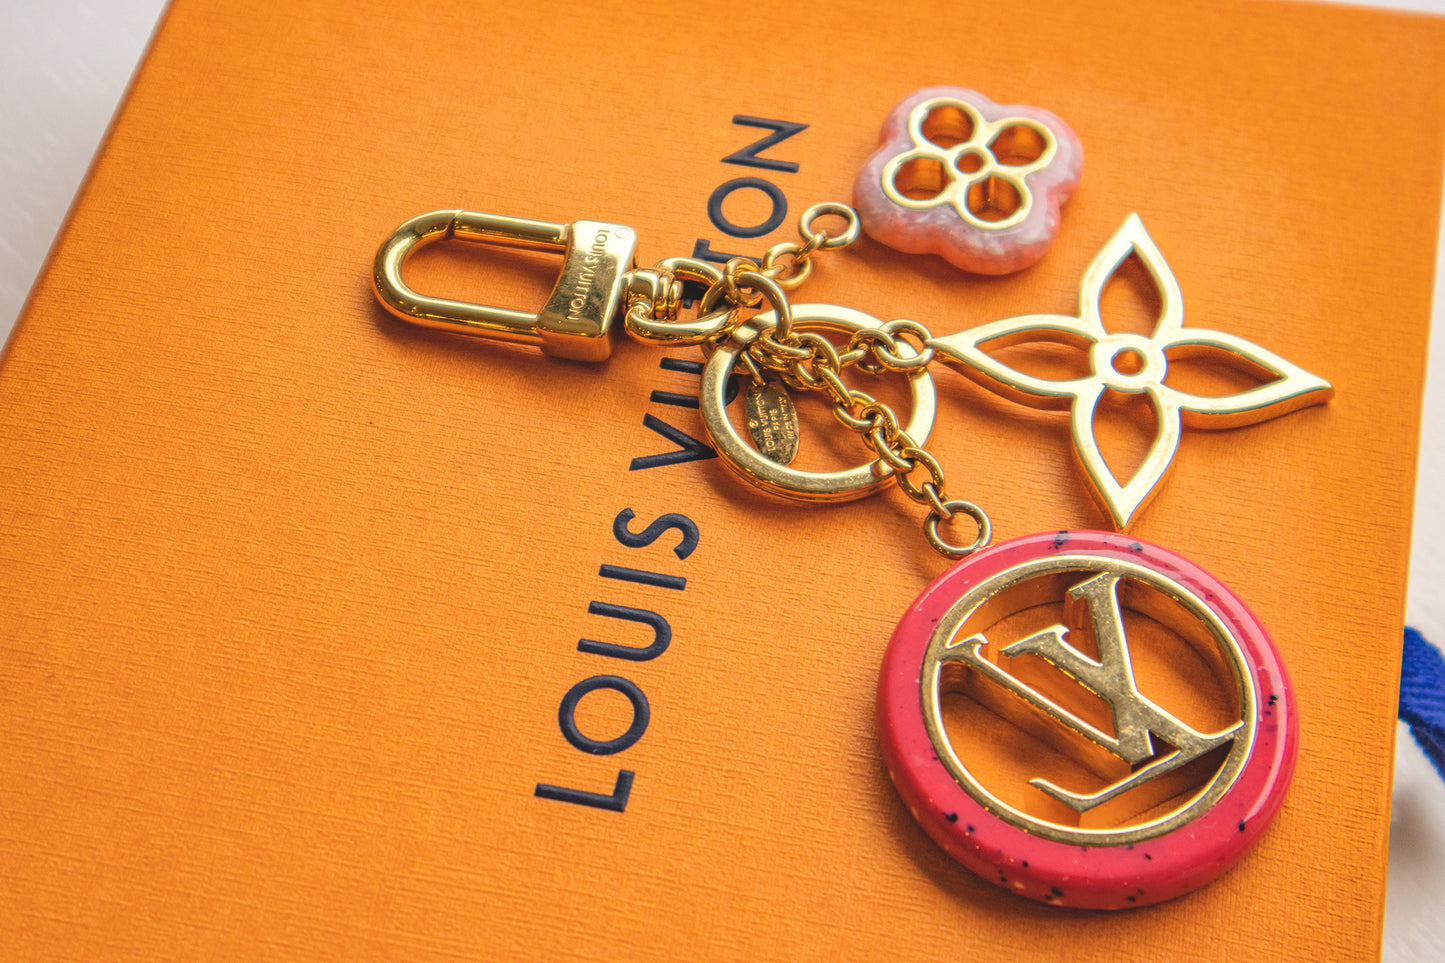 Louis Vuitton - Schlüsselanhänger rosafarben